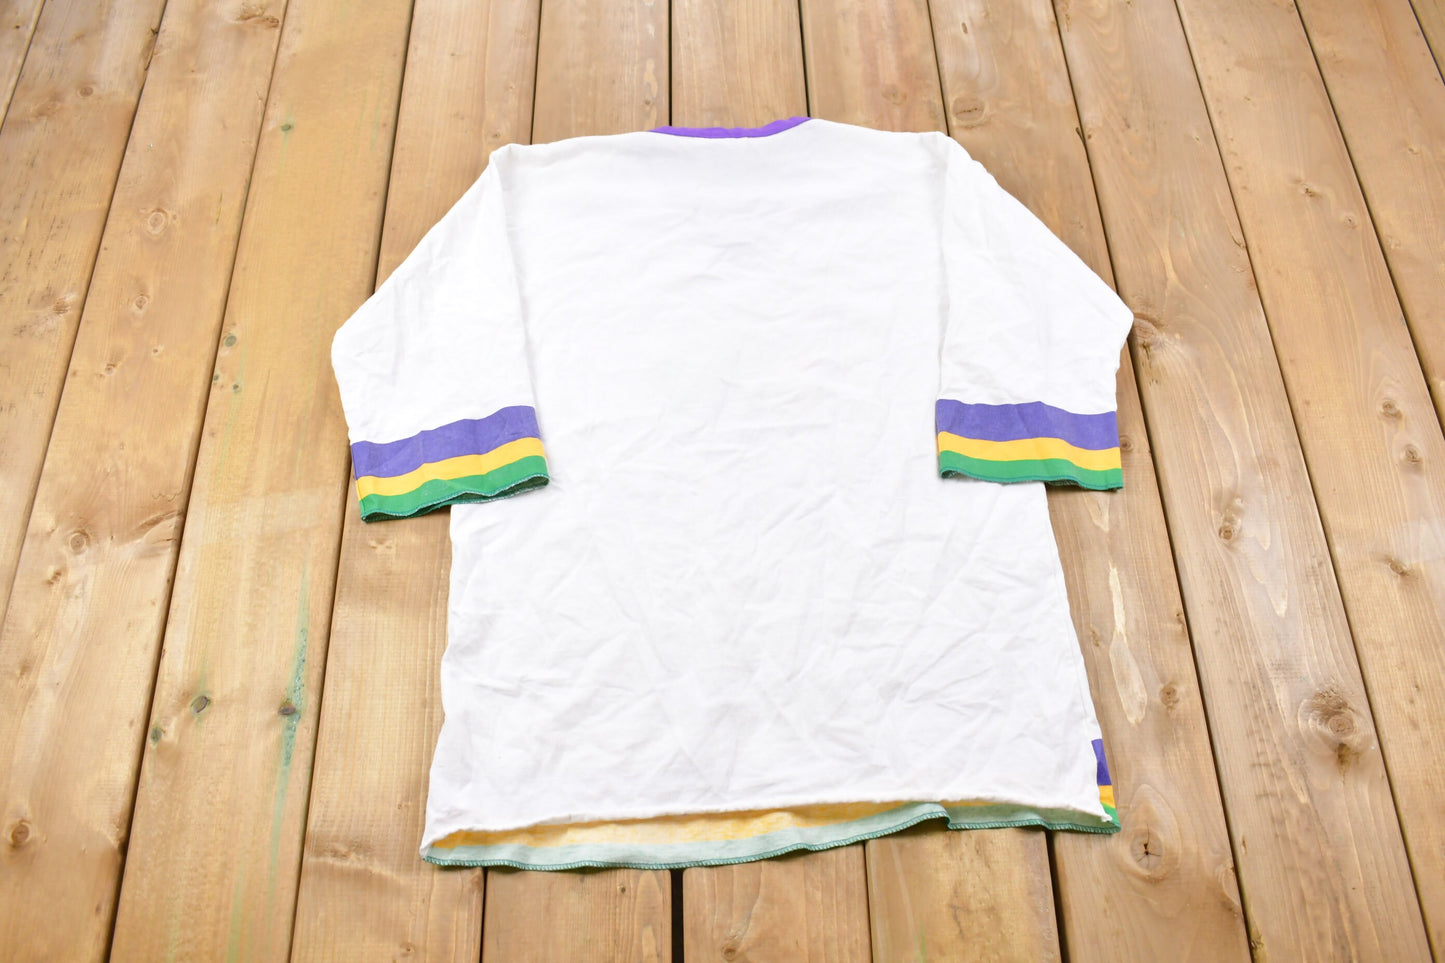 Vintage 1990s River Frogs Crewneck Sweatshirt / Made in USA / 90s Crewneck / Sports Apparel / Athleisure / Streetwear